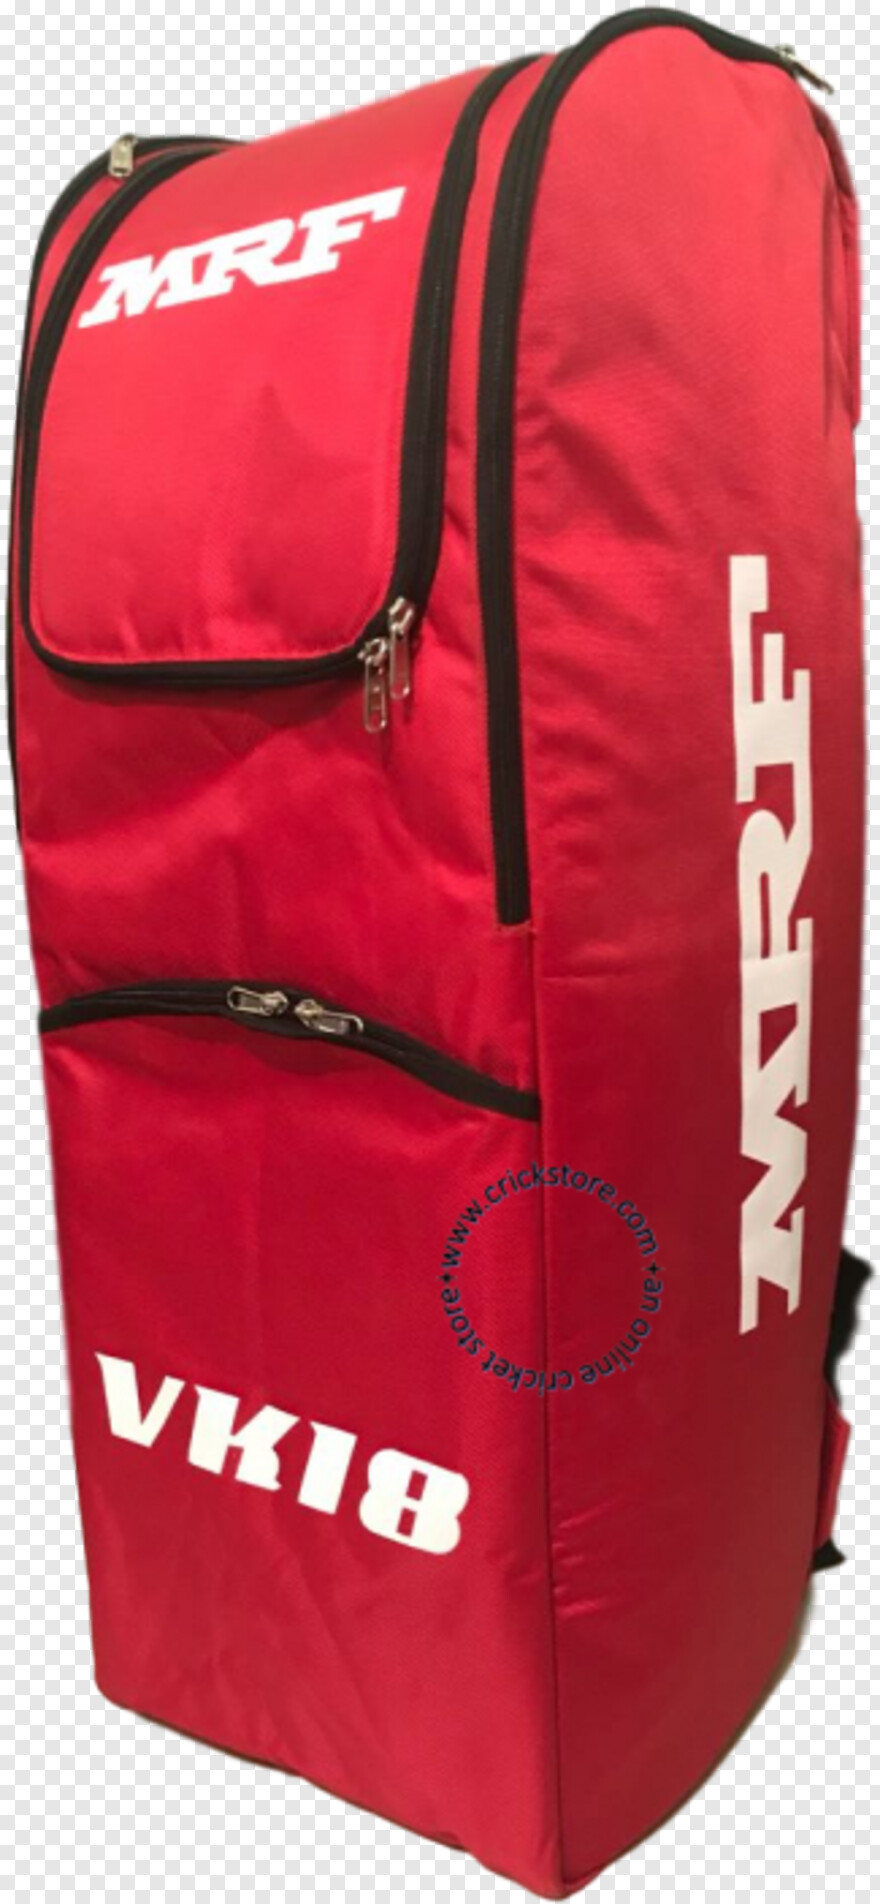  Cricket Kit, First Aid Kit, Kit Kat, Cricket Clipart, Cricket Cup, Cricket Vector